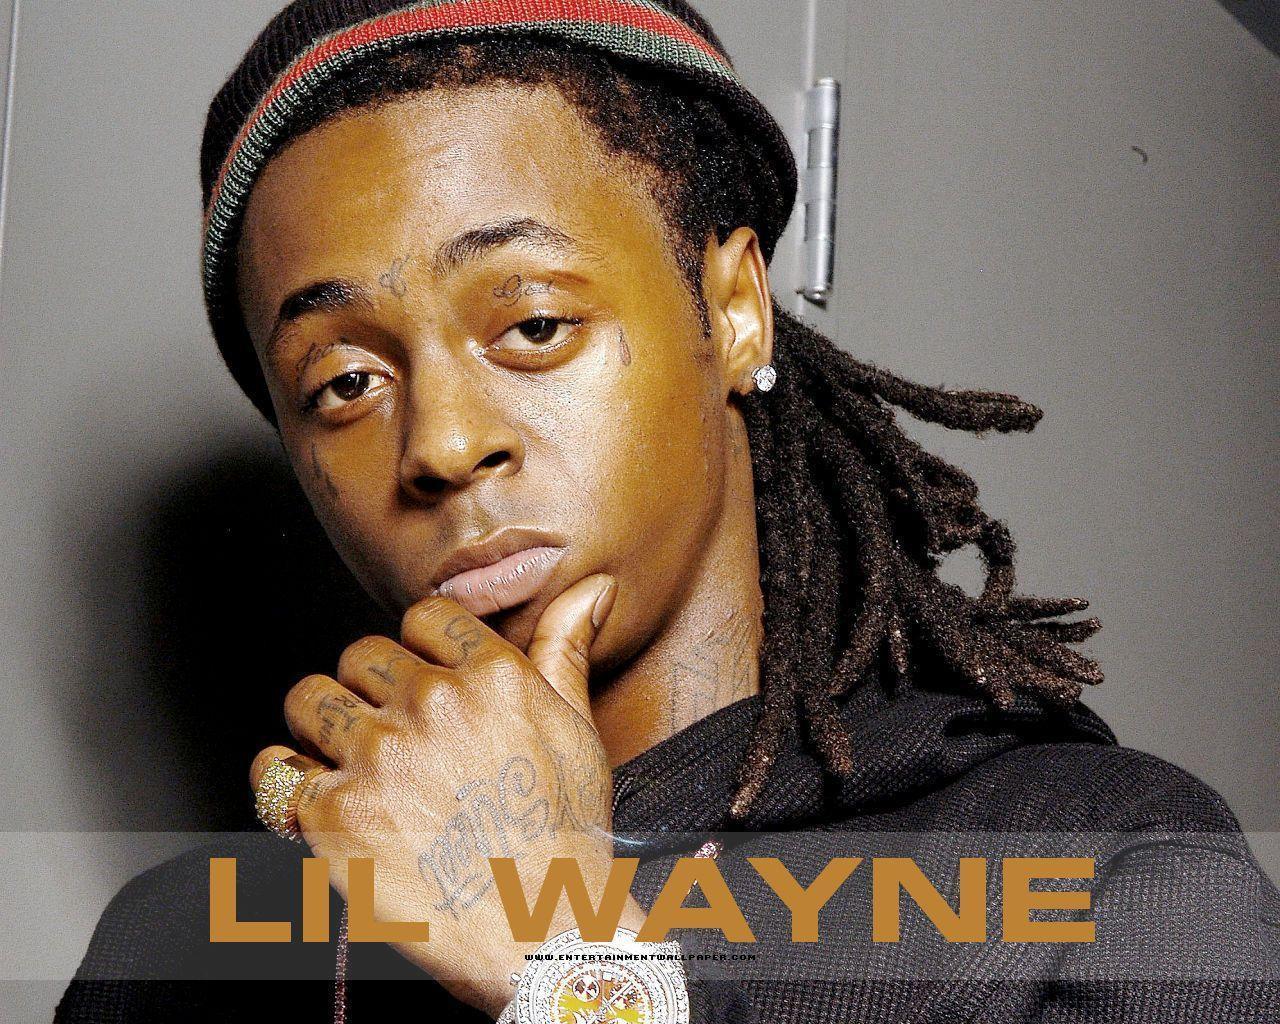 Lil Wayne Wallpaper 21254 Image. wallgraf